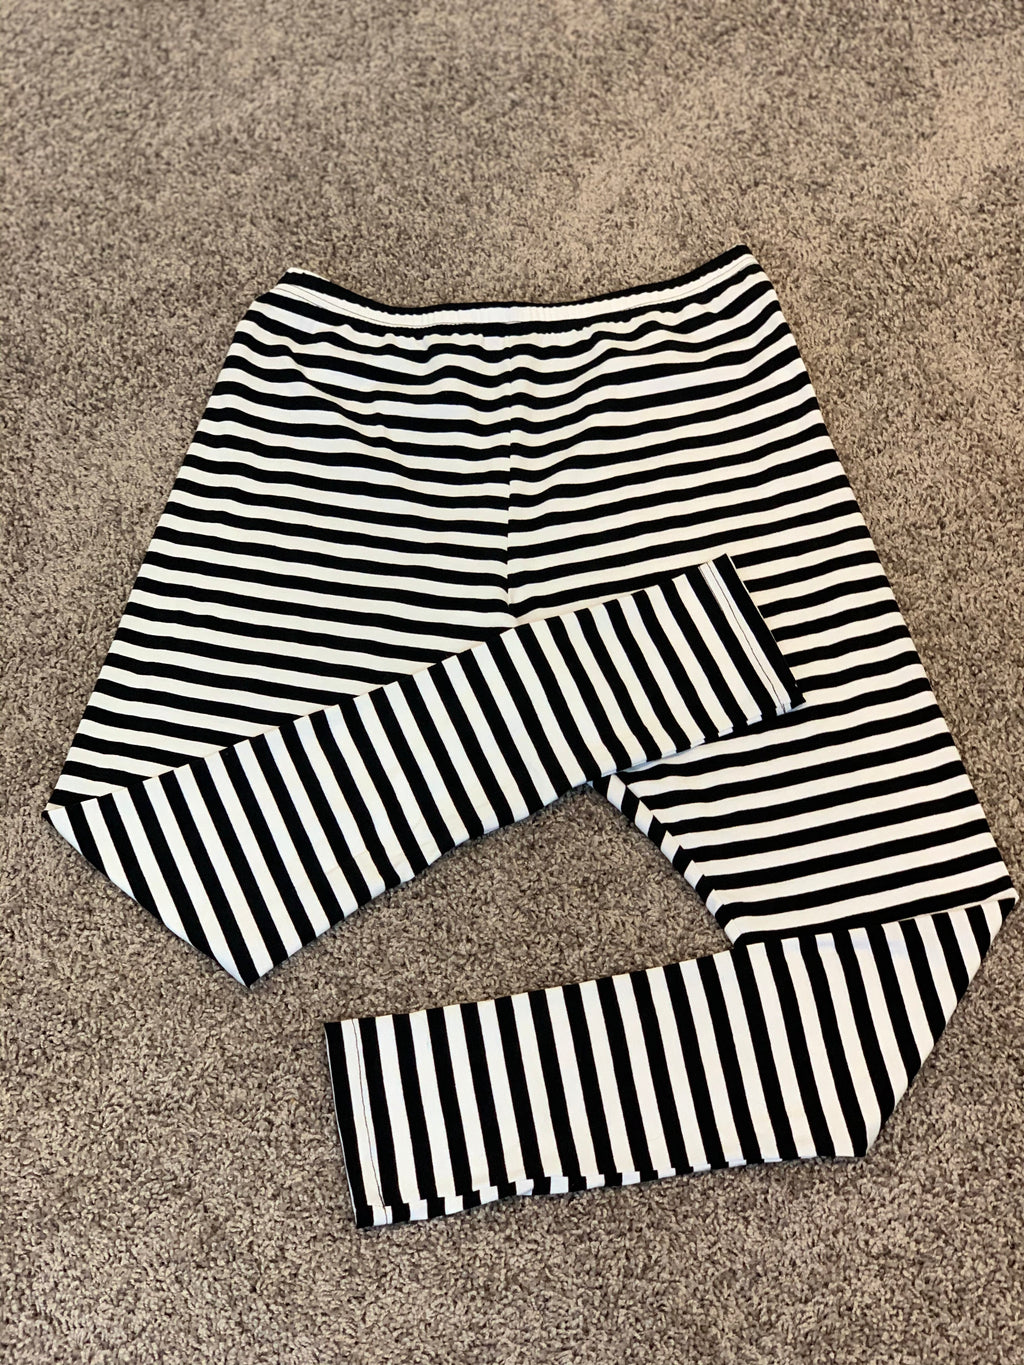 .Black and white striped leggings - Long